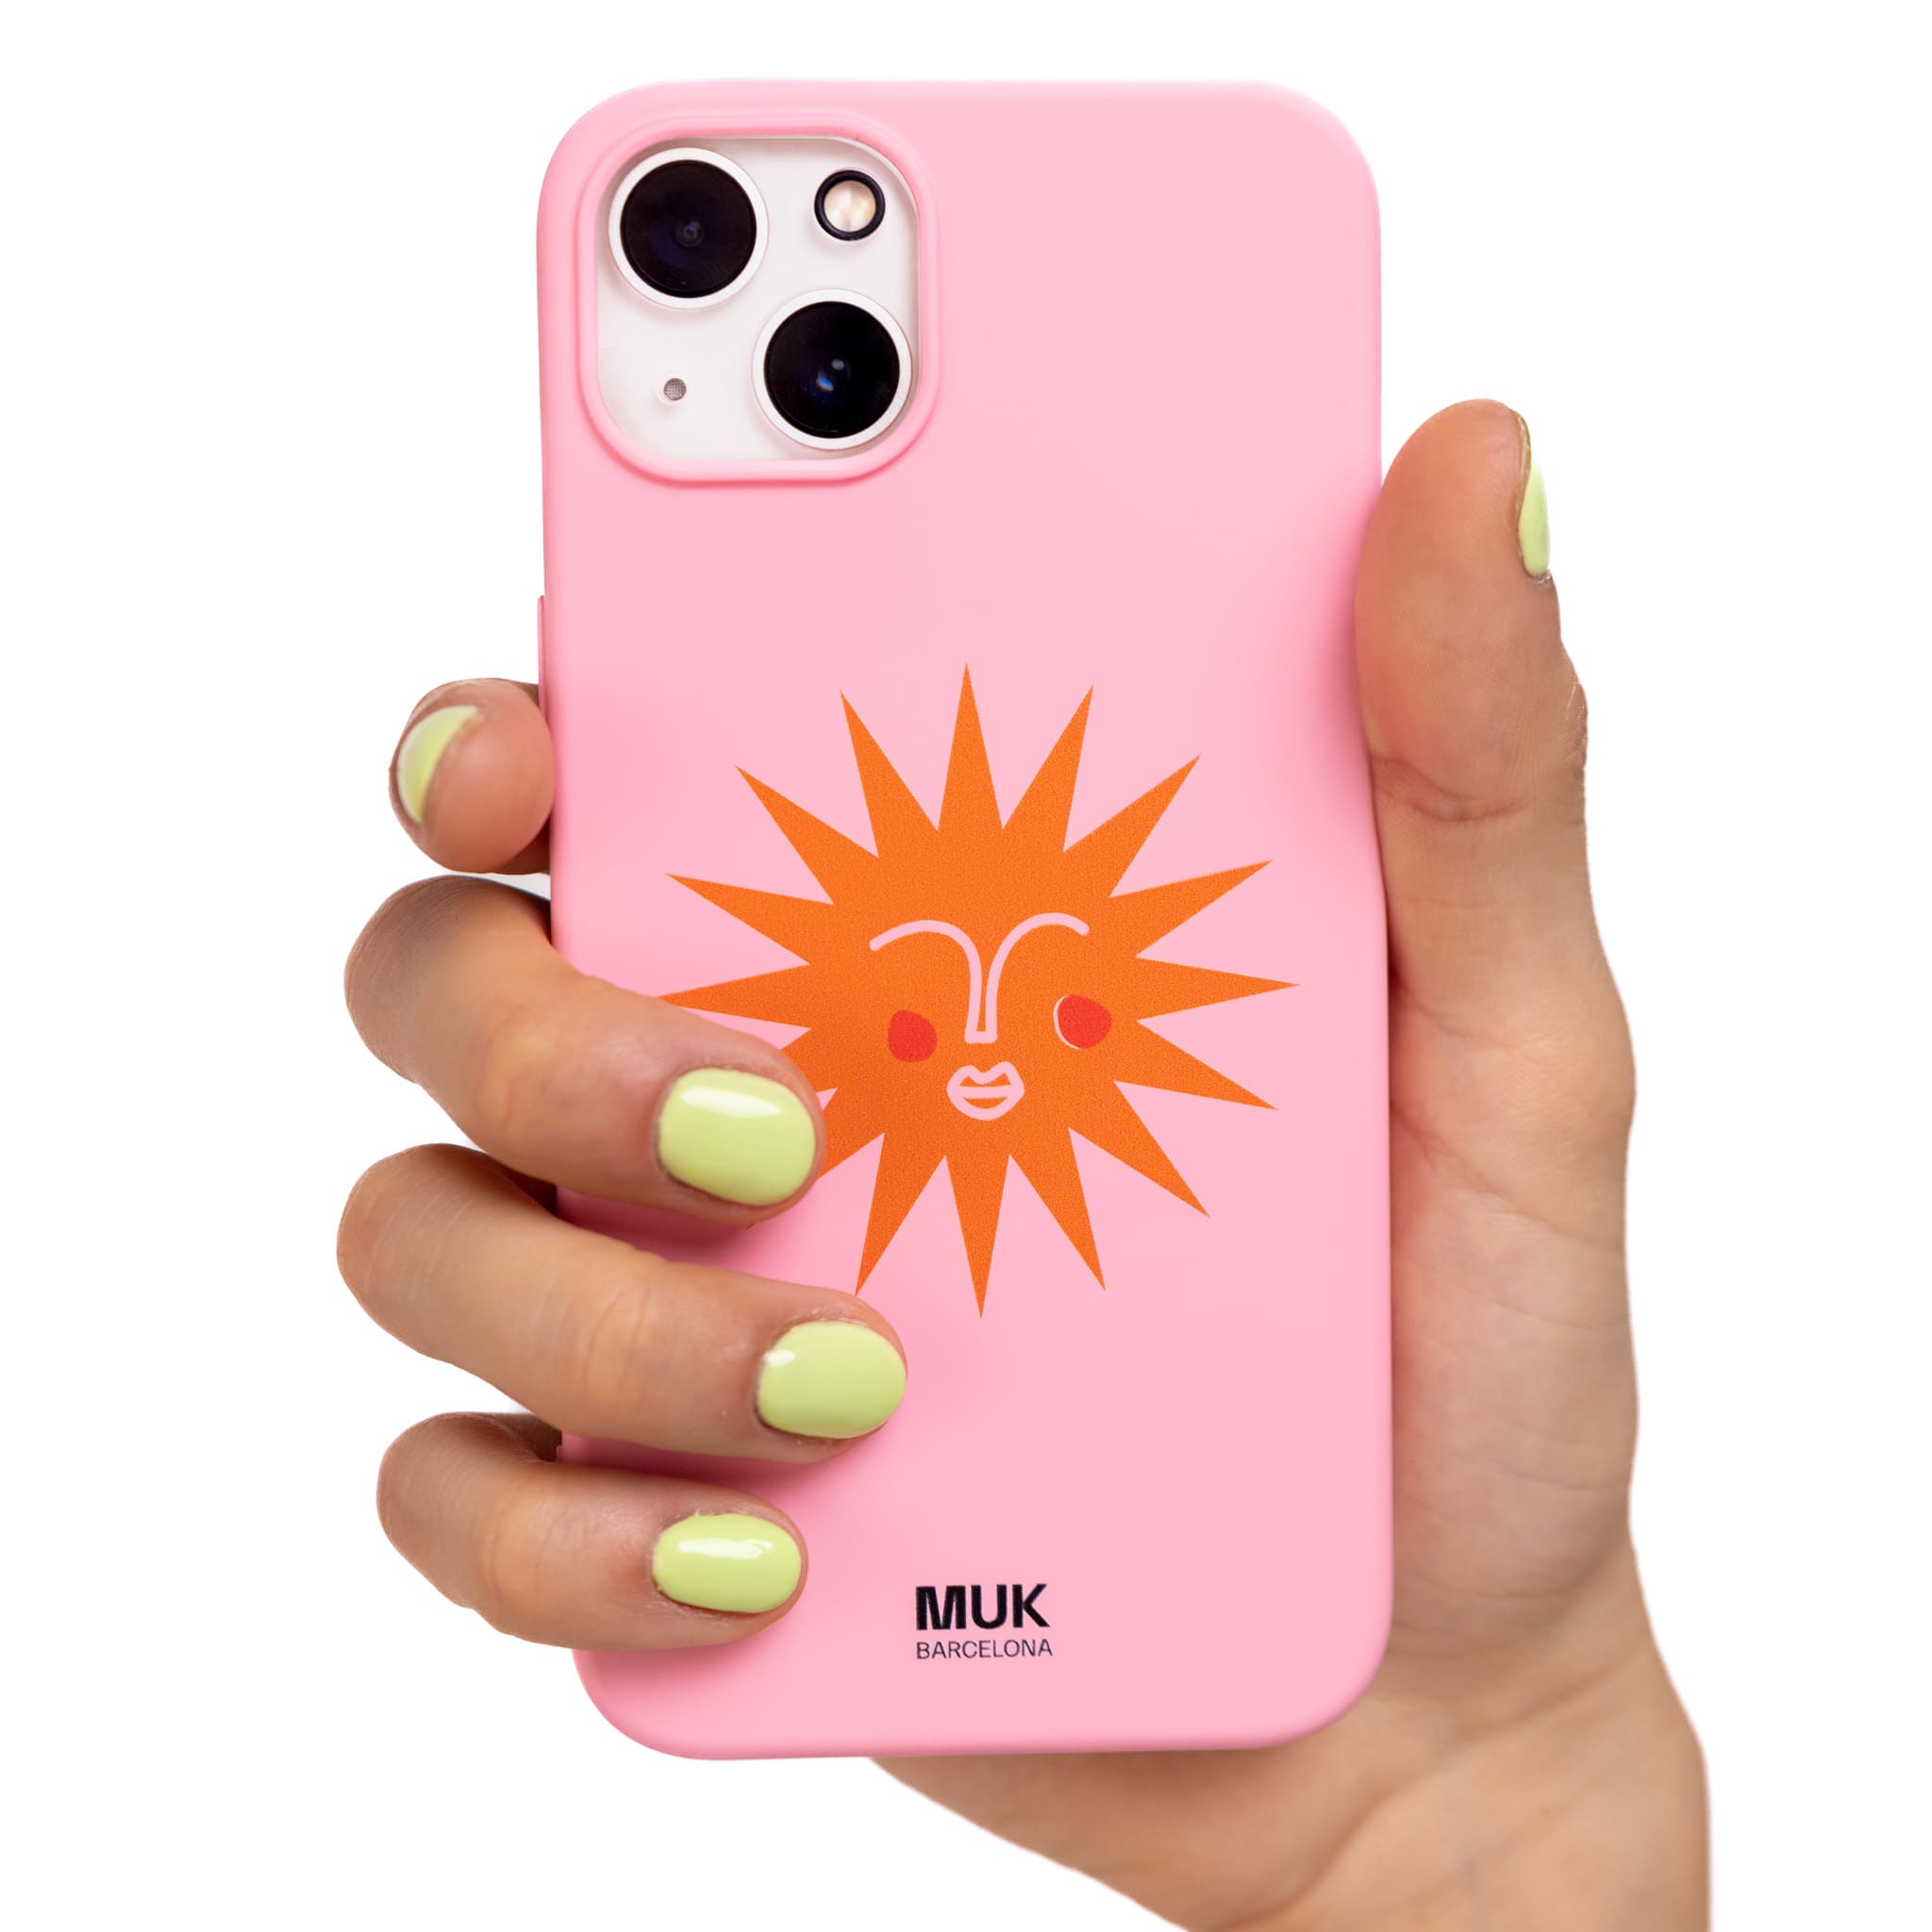  Pink TPU  case with orange sun design.
